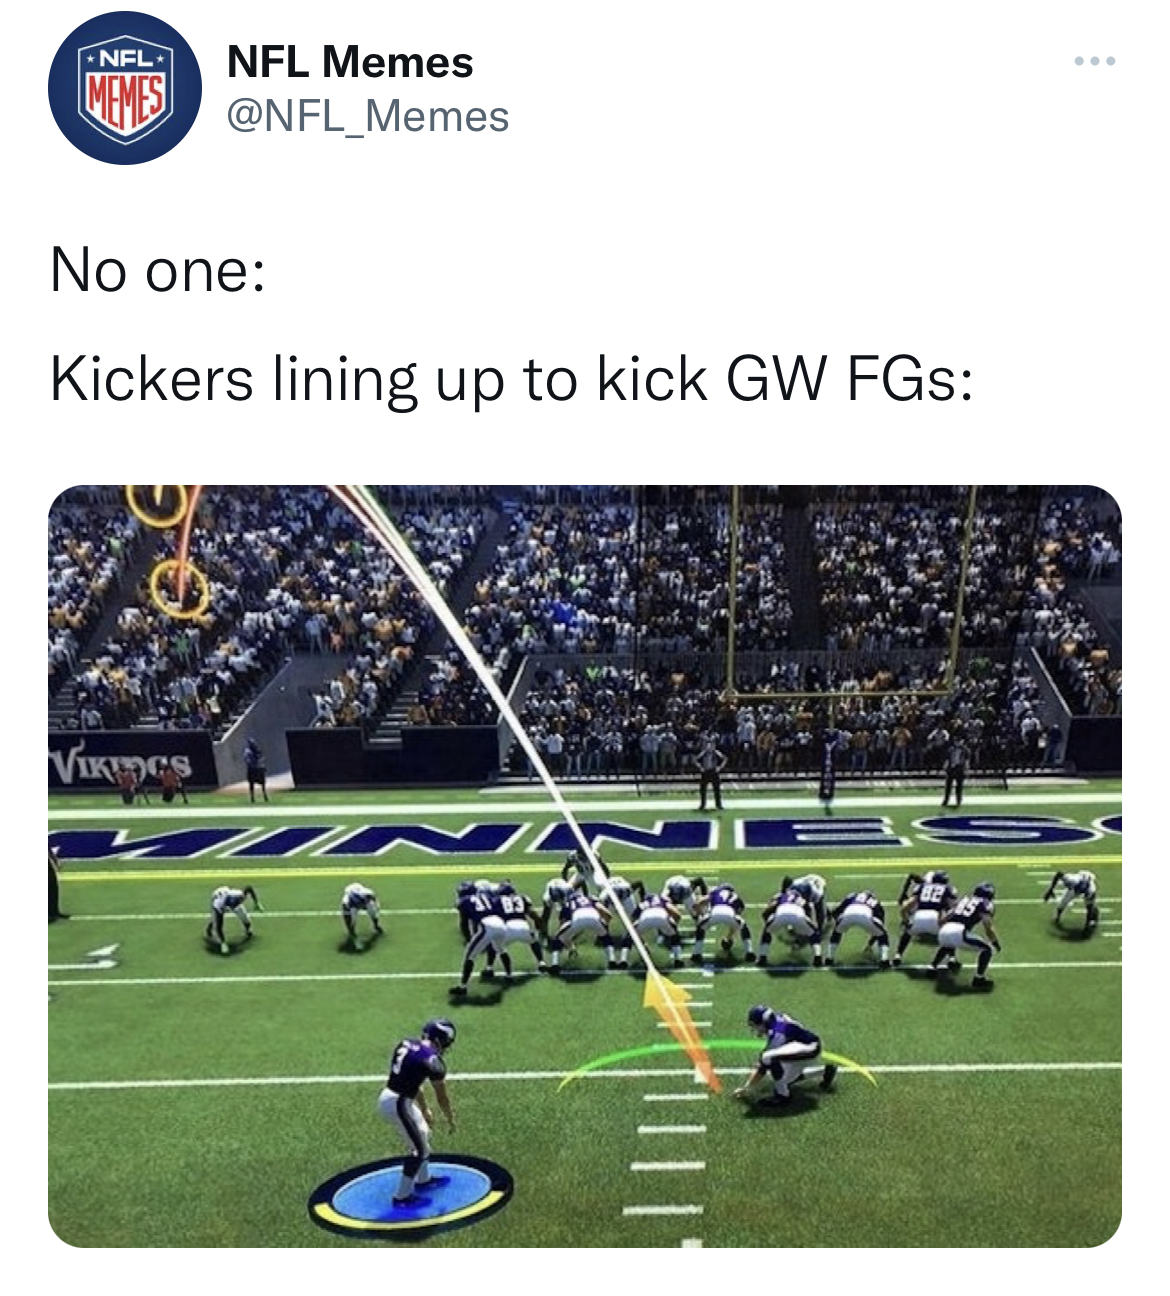 NFL memes week 1 2022 - grass - Nfl Nfl Memes Memes No one Kickers lining up to kick Gw Fgs Vikings